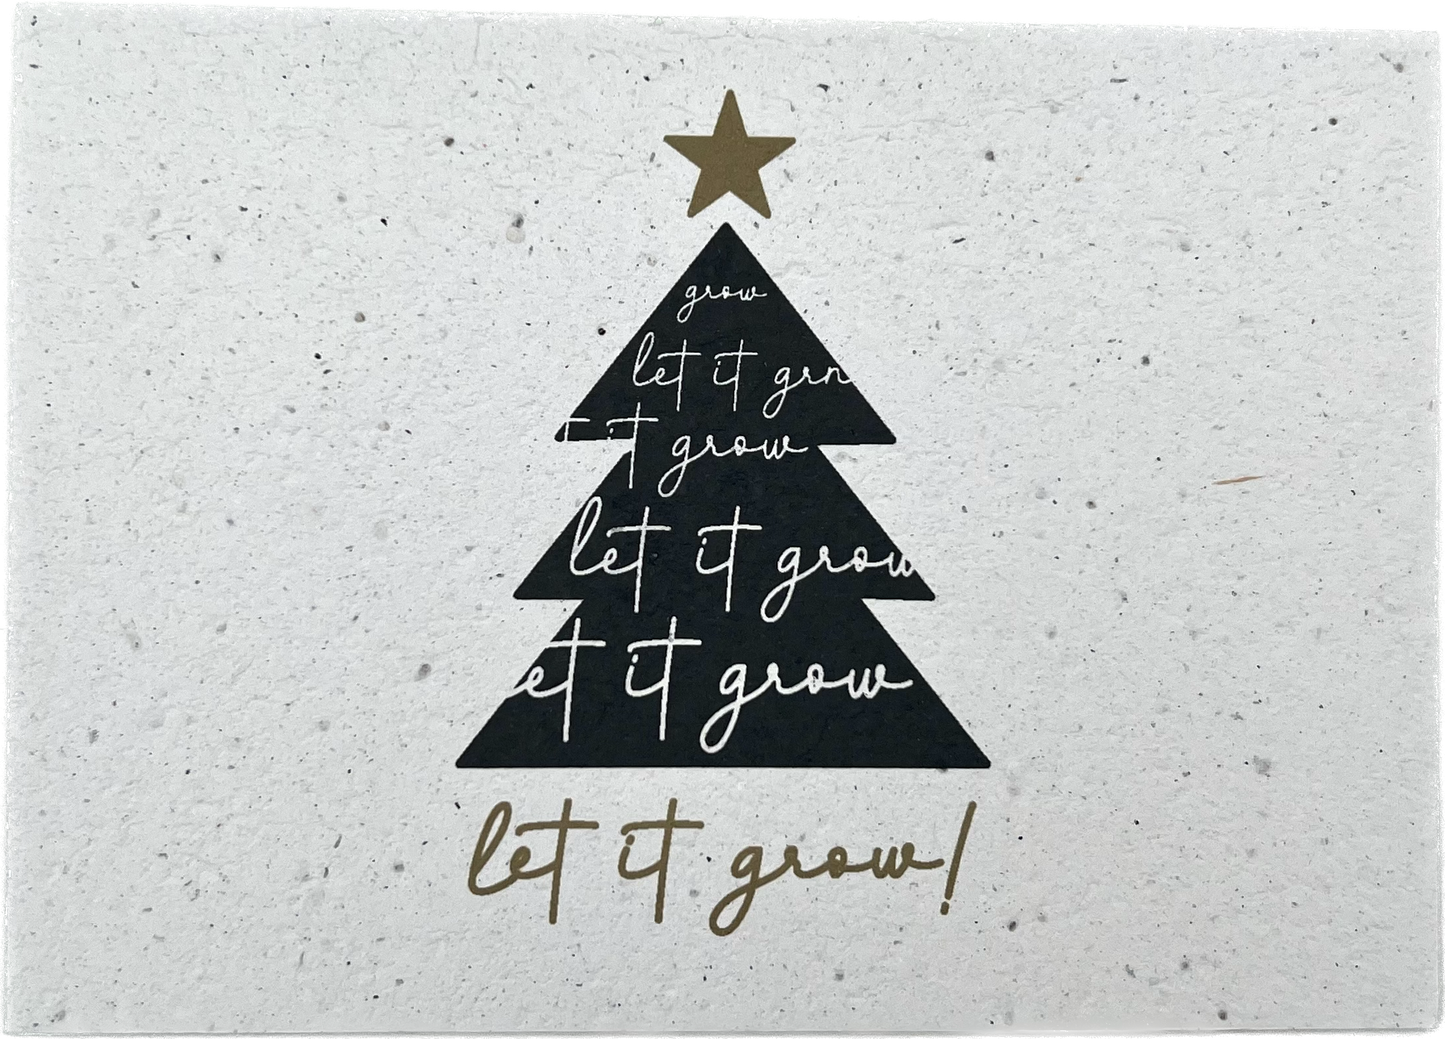 BLOOM YOUR MESSAGE Saatgutkarte "Let it grow!" mit Weihnachtsbaum Motiv | 100% recyceltes Material